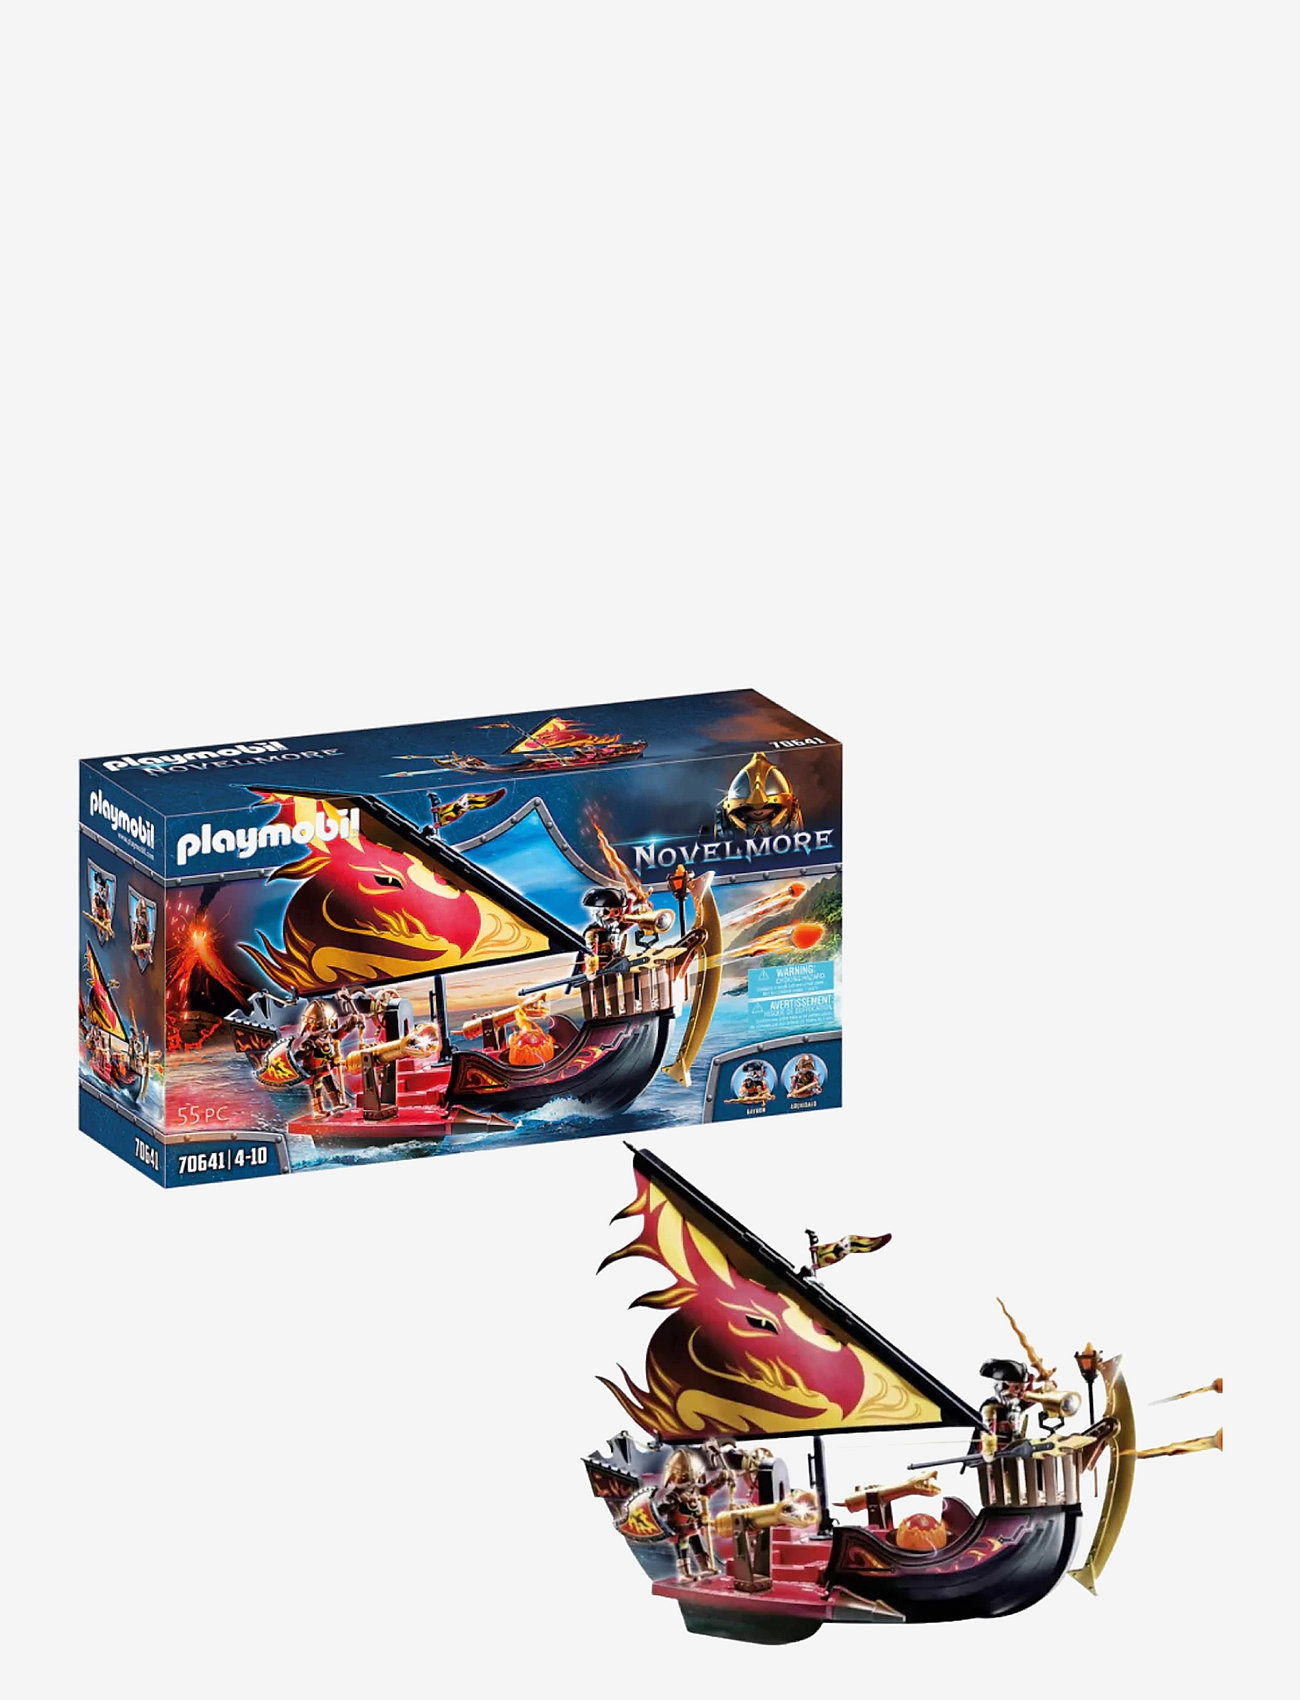 PLAYMOBIL - PLAYMOBIL Novelmore Burnham Raiders Fire Ship - 70641 - playmobil novelmore - multicolored - 0